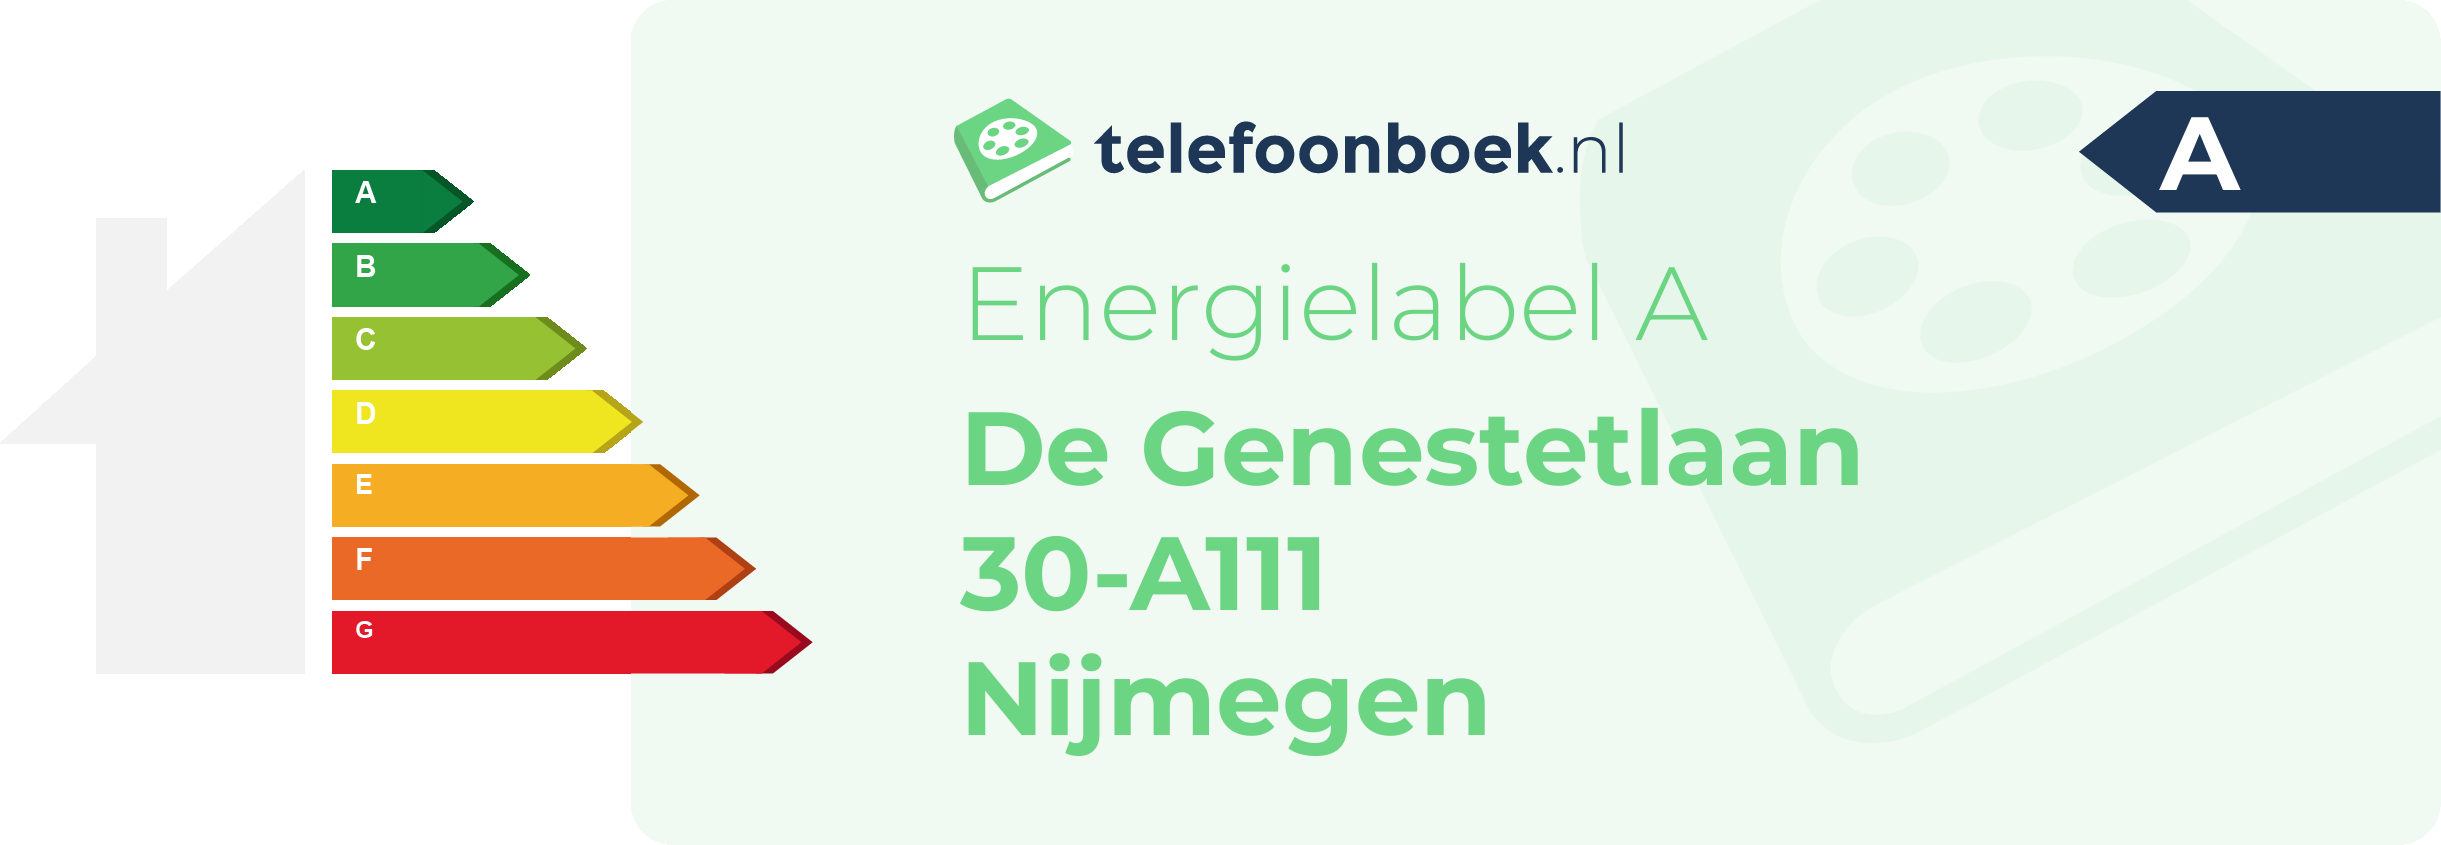 Energielabel De Genestetlaan 30-A111 Nijmegen